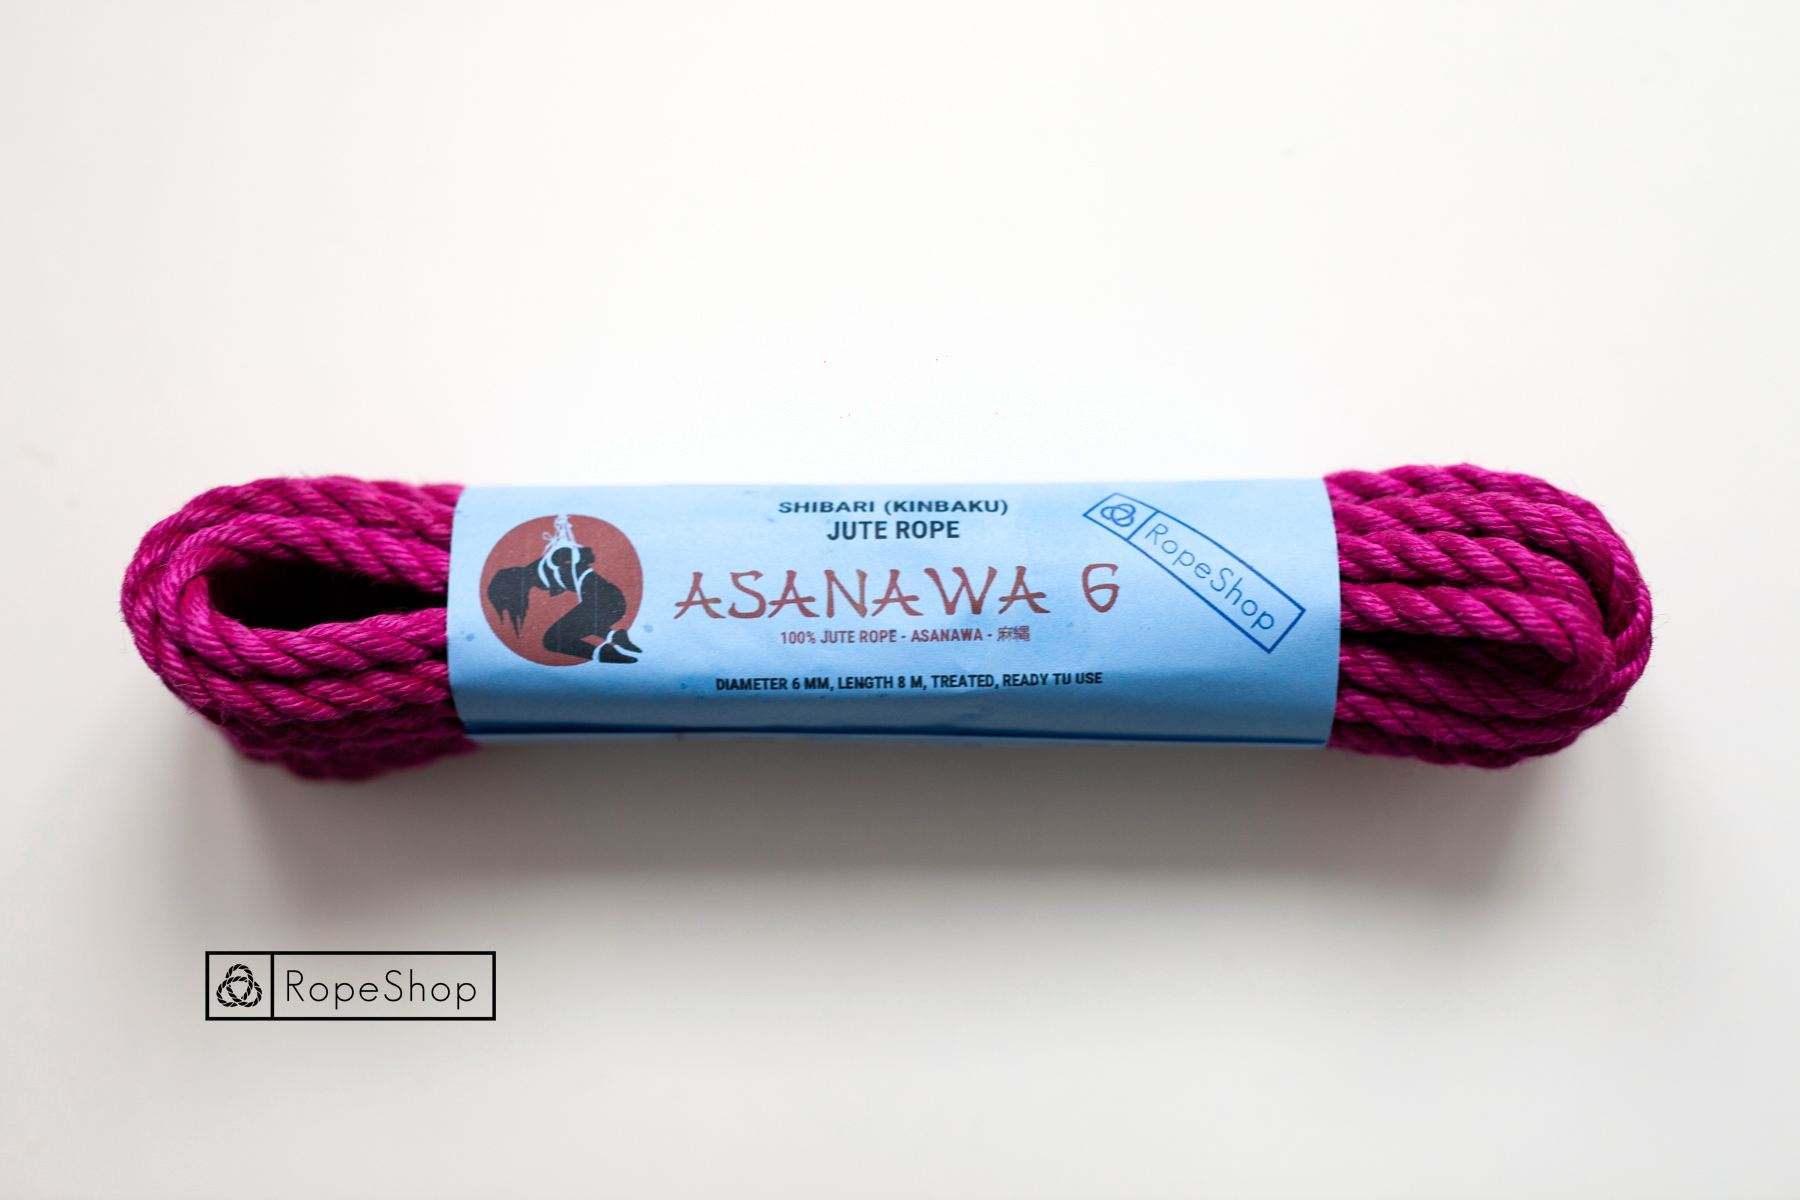 Веревка для шибари 6 мм. джутовая Asanawa 6 (Japan) обработанная, розовая